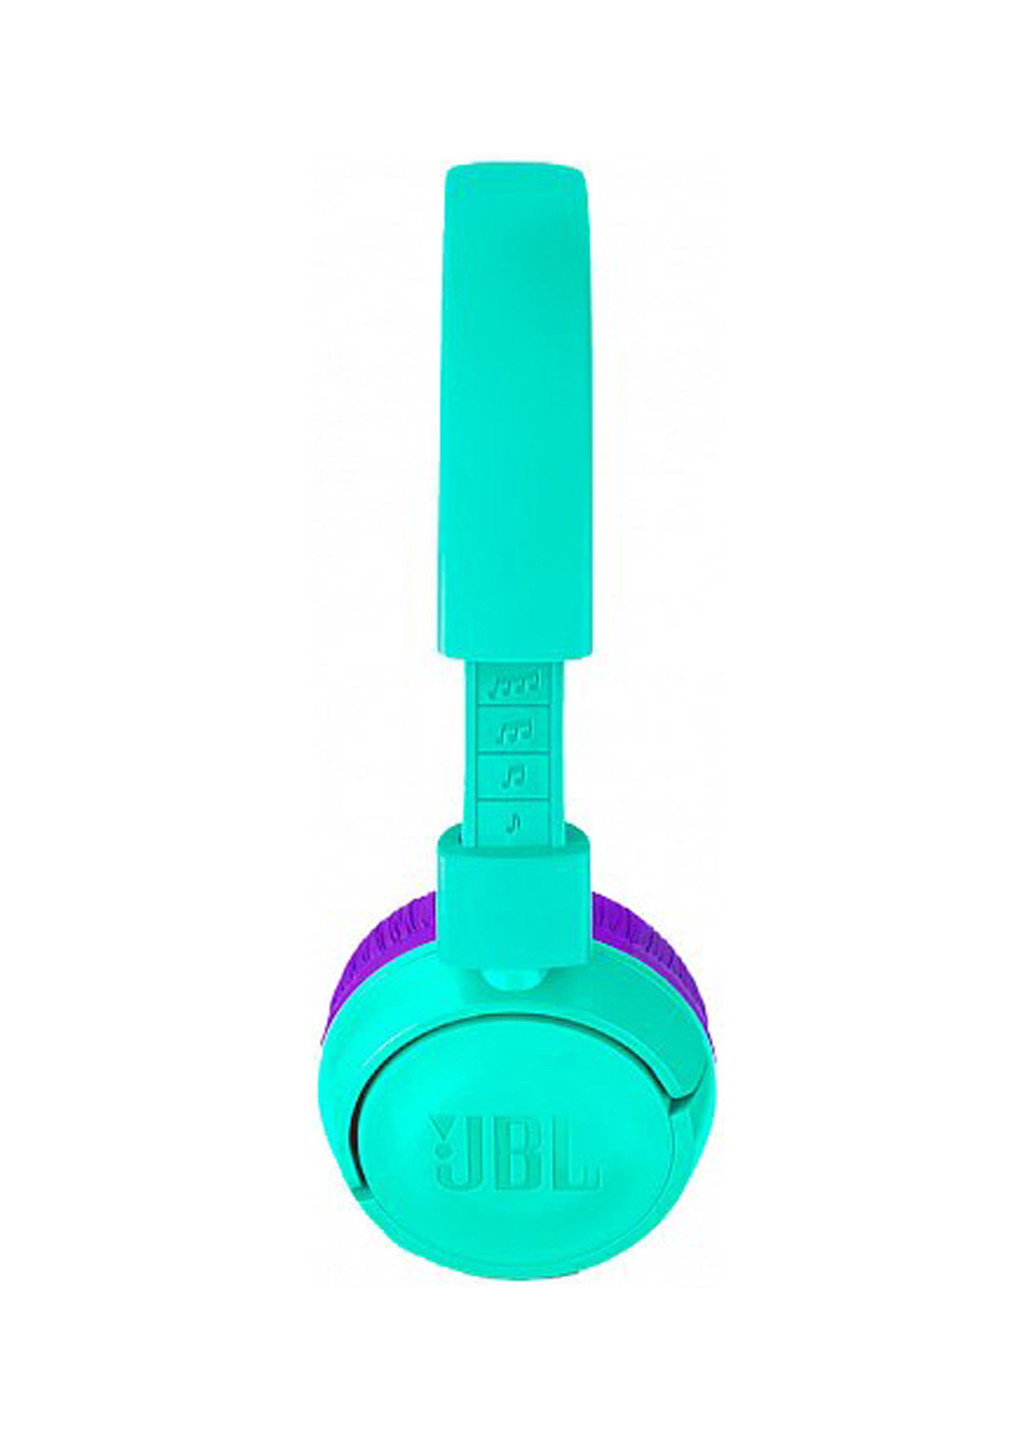 Бездротові навушники для дітей JR 300 BT Tropic Teal (JR300BTTEL) JBL беспроводные для детей jr 300 bt tropic teal (jbljr300bttel) (160880255)